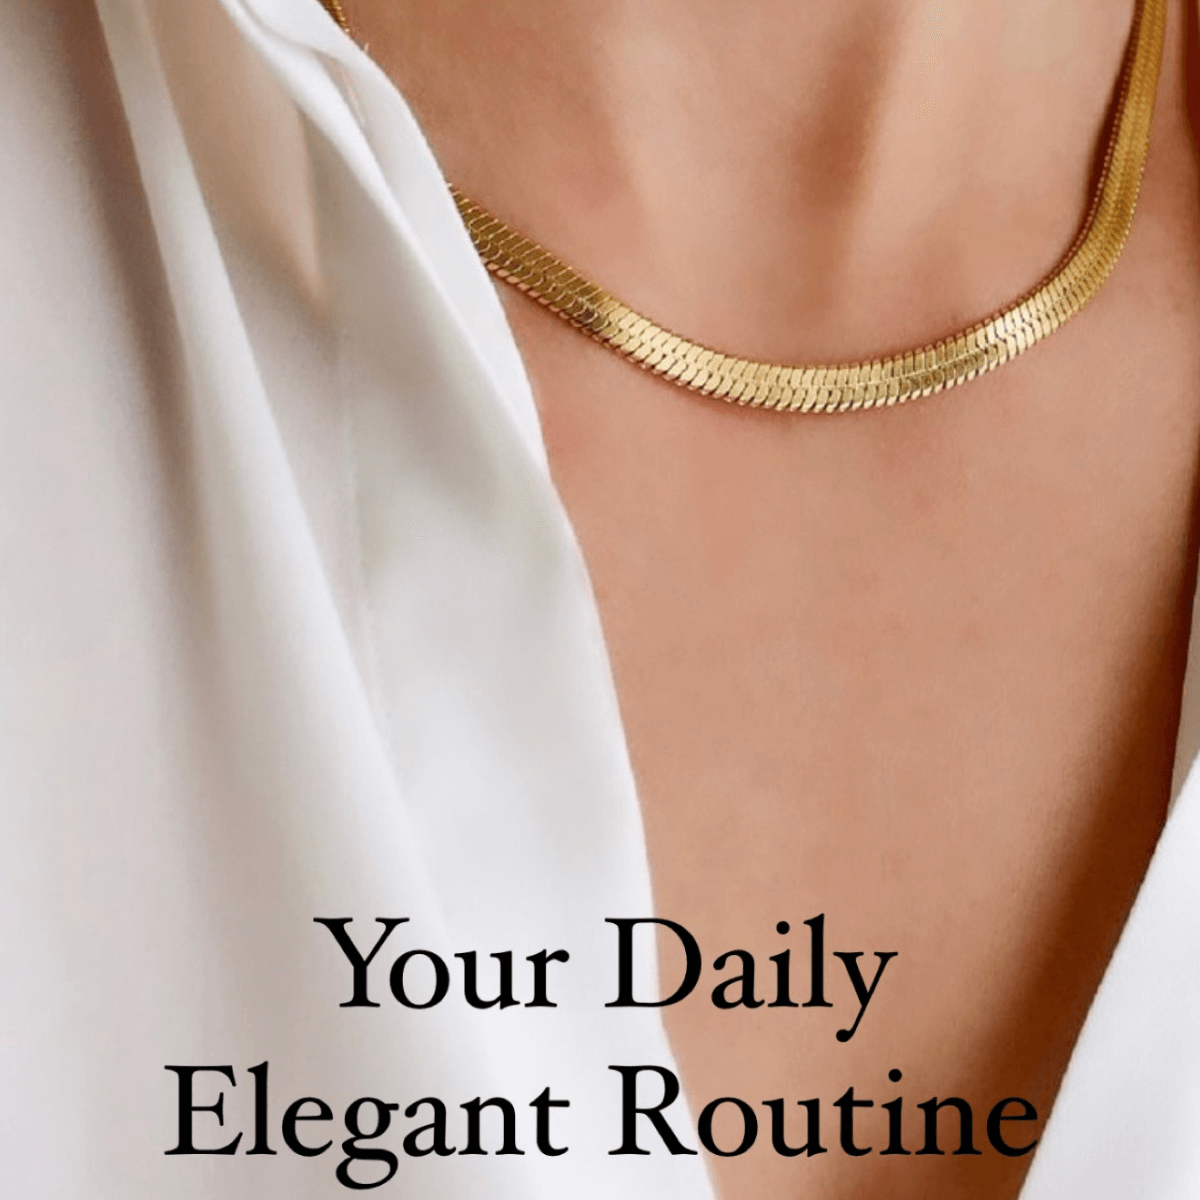 Byou Jewelry - Gold Thin Herringbone Chain Necklace